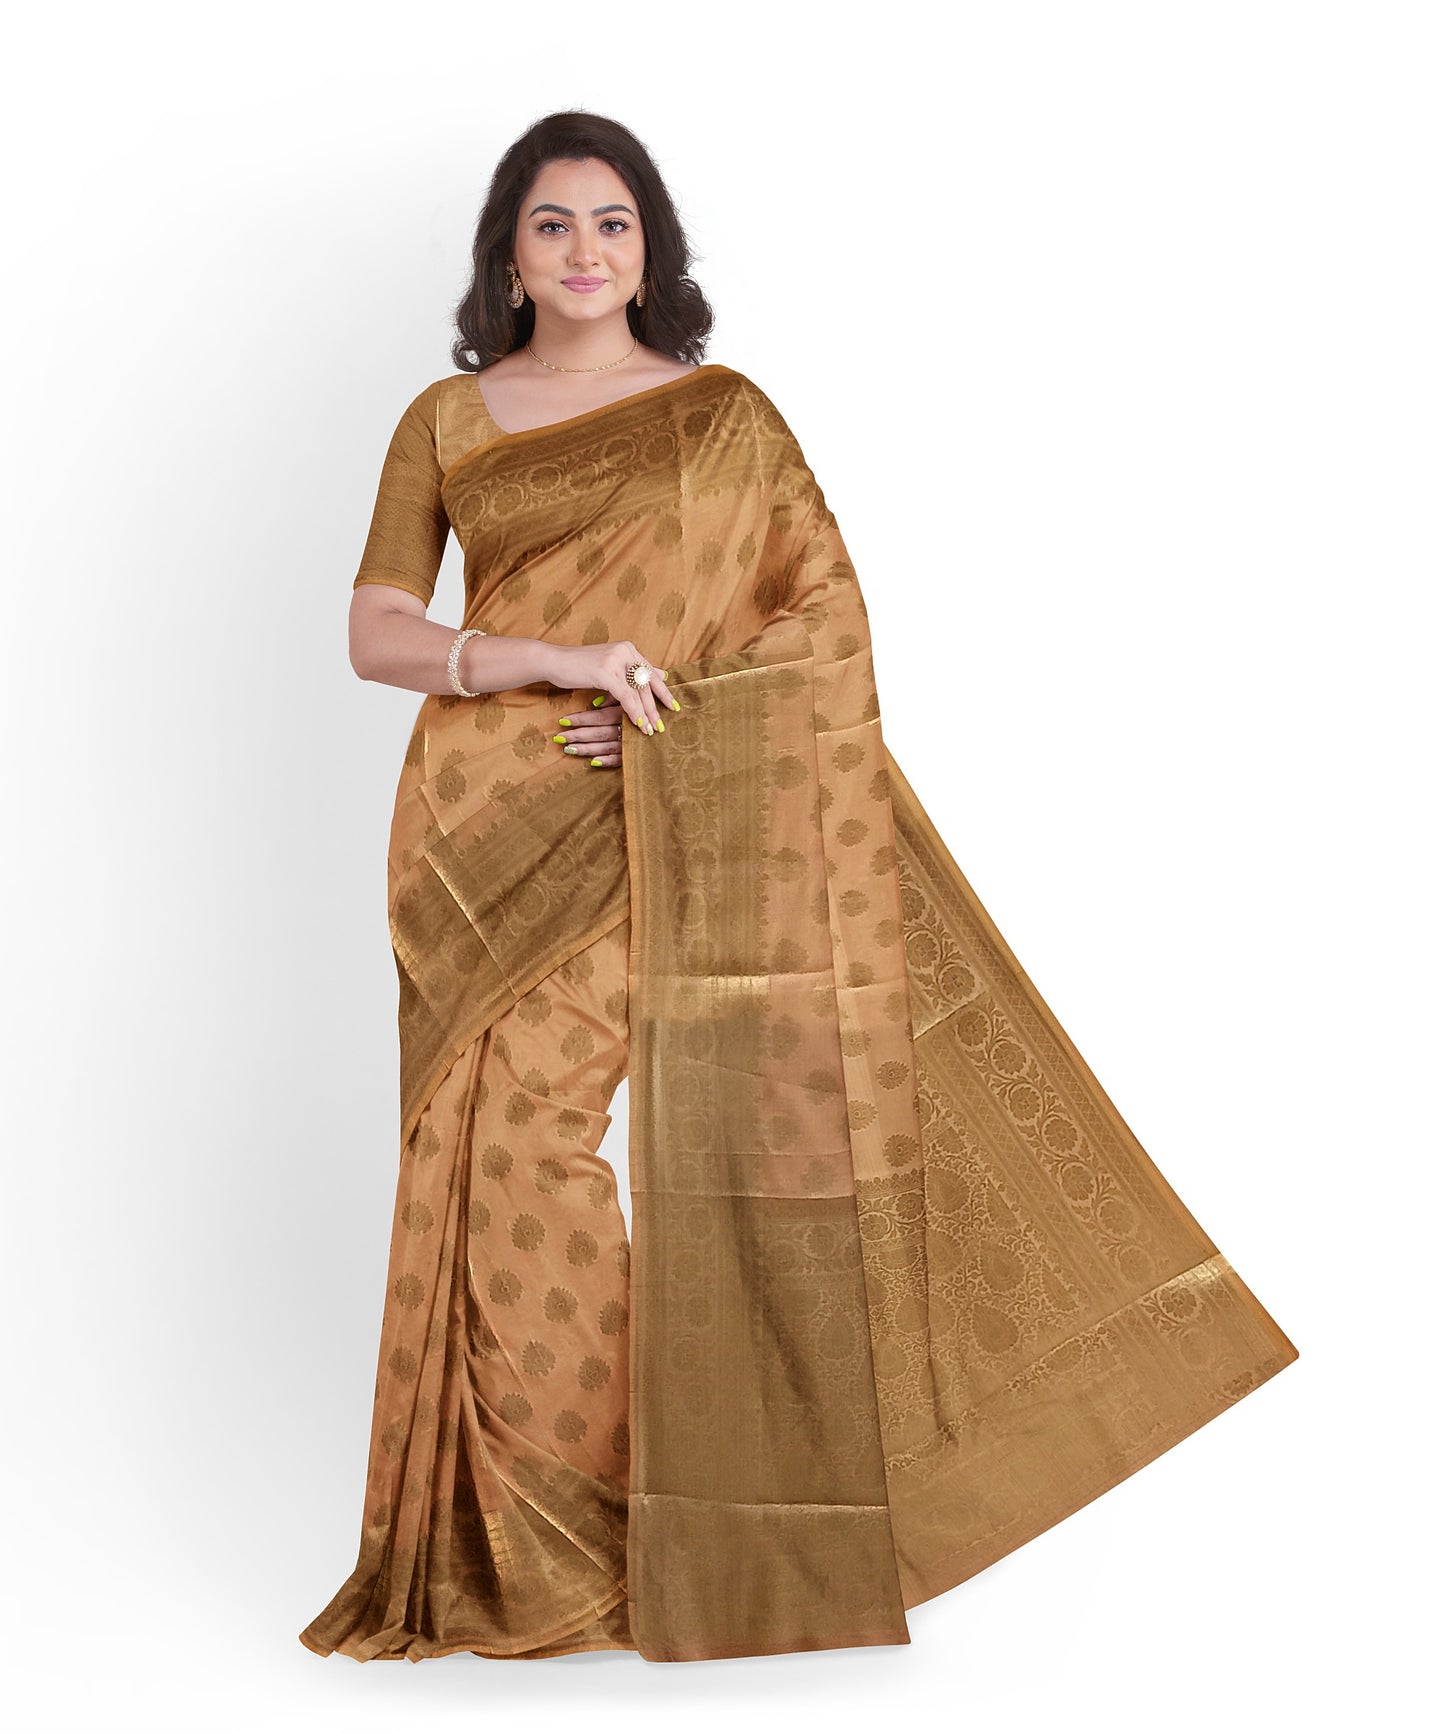 Classic Pattu Style Silk Cotton Saree With Golden Motifs Running Border & Blouse - With Blouse - SonaMandir